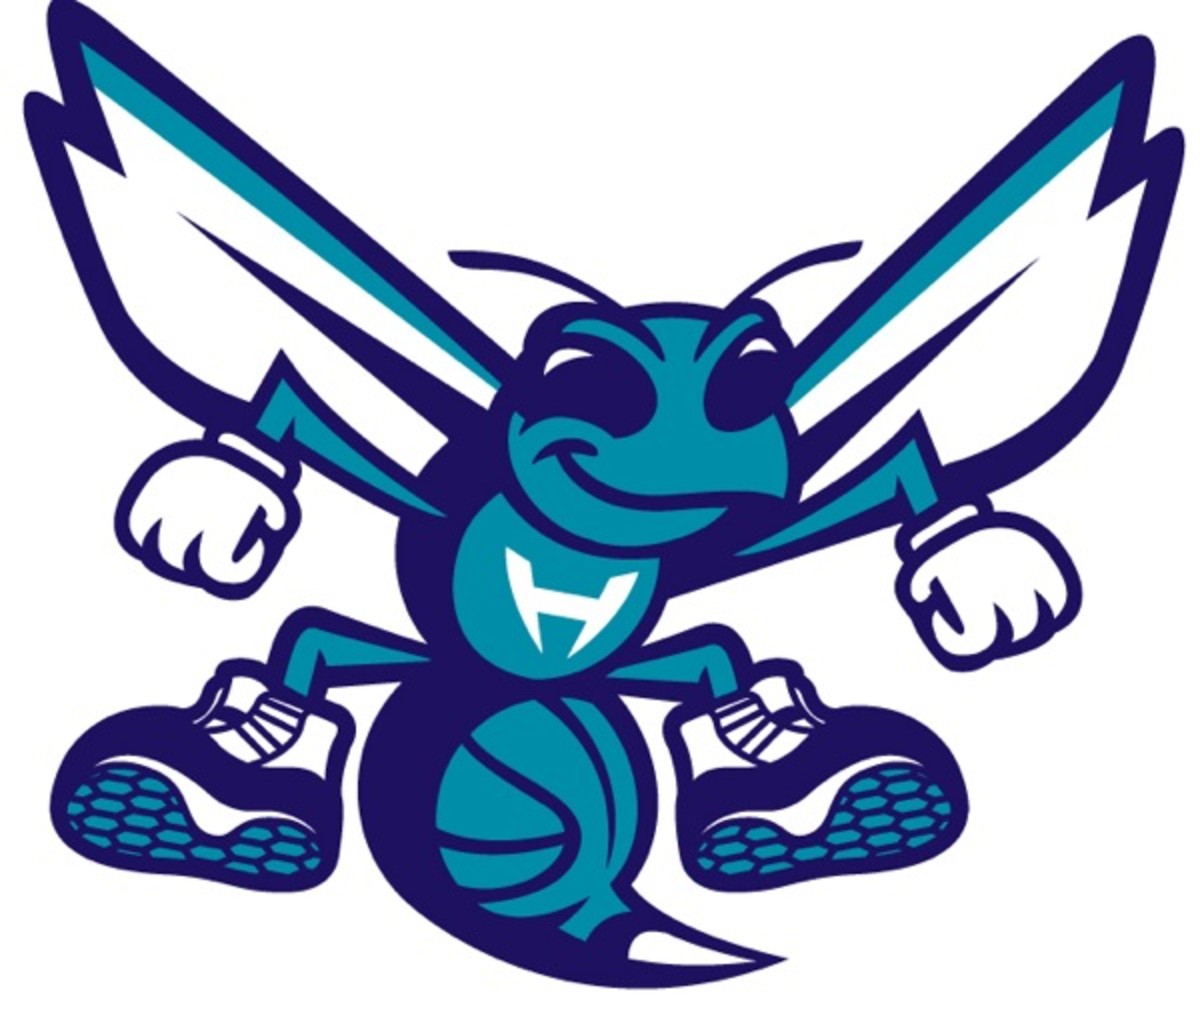 The Hornets' new mascot logo. (Bobcats)